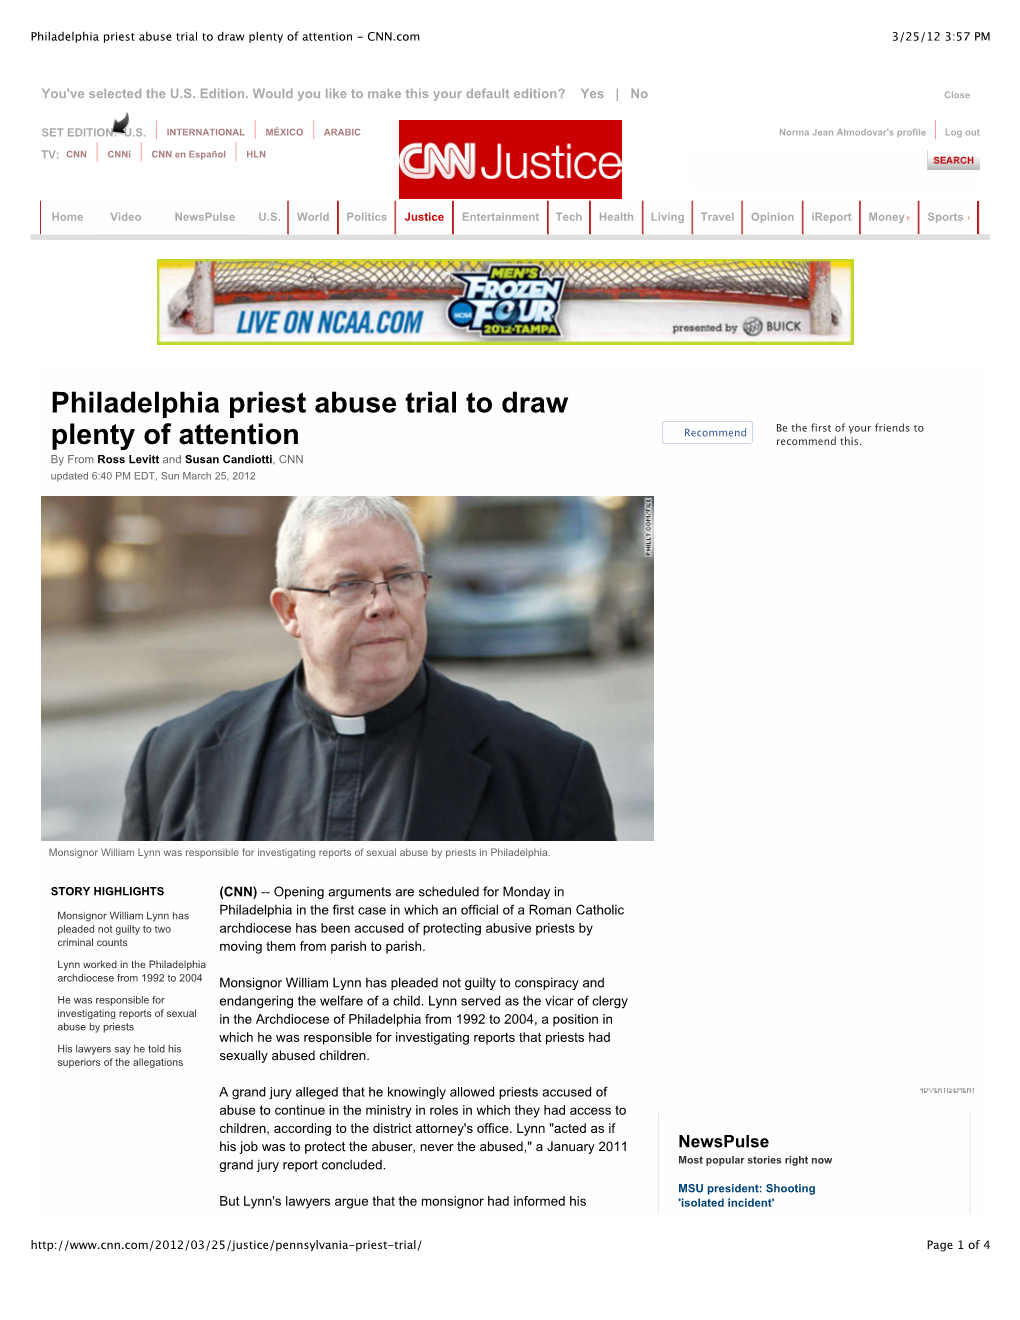 Philadelphia Priest Abuse Trial to Draw Plenty of Attention - CNN.Com 3/25/12 3:57 PM